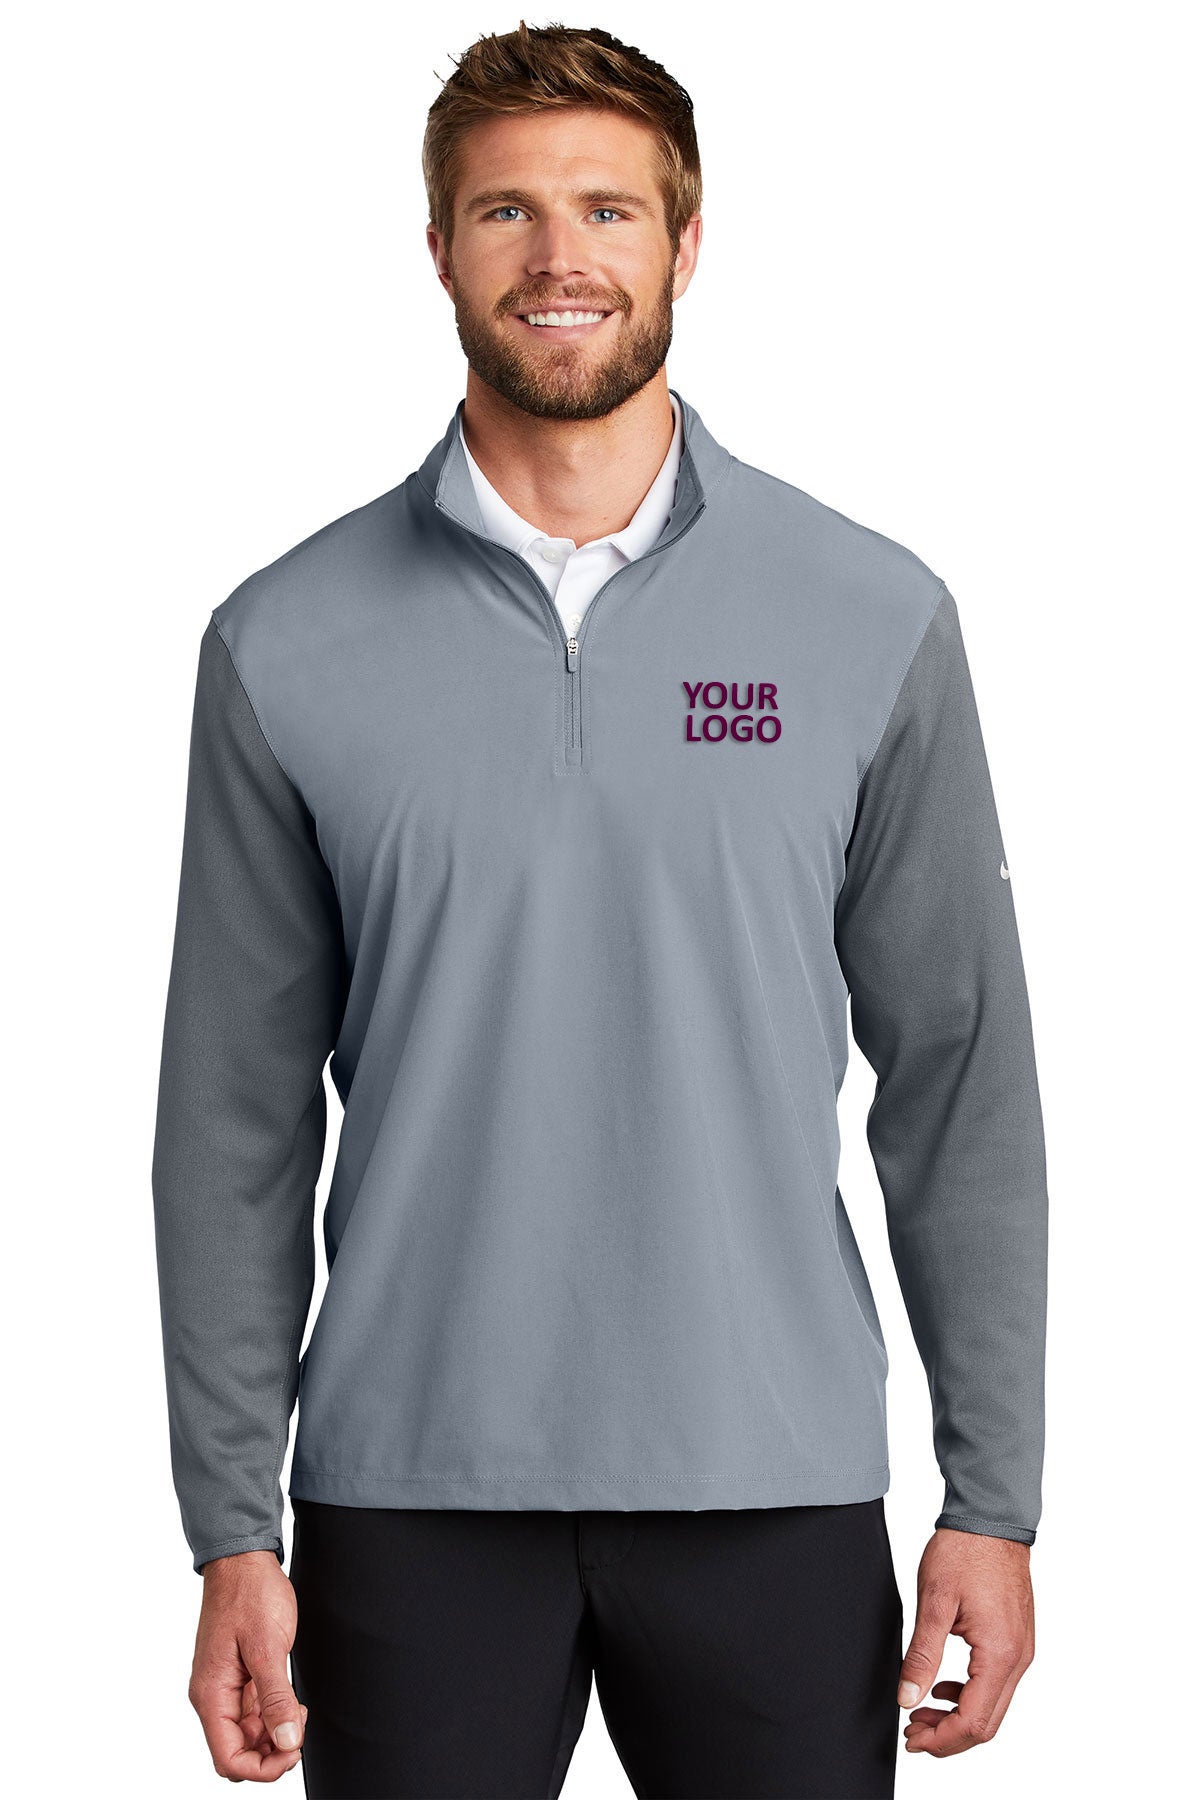 nike cool grey/ dark grey 746102 sweatshirts with logos